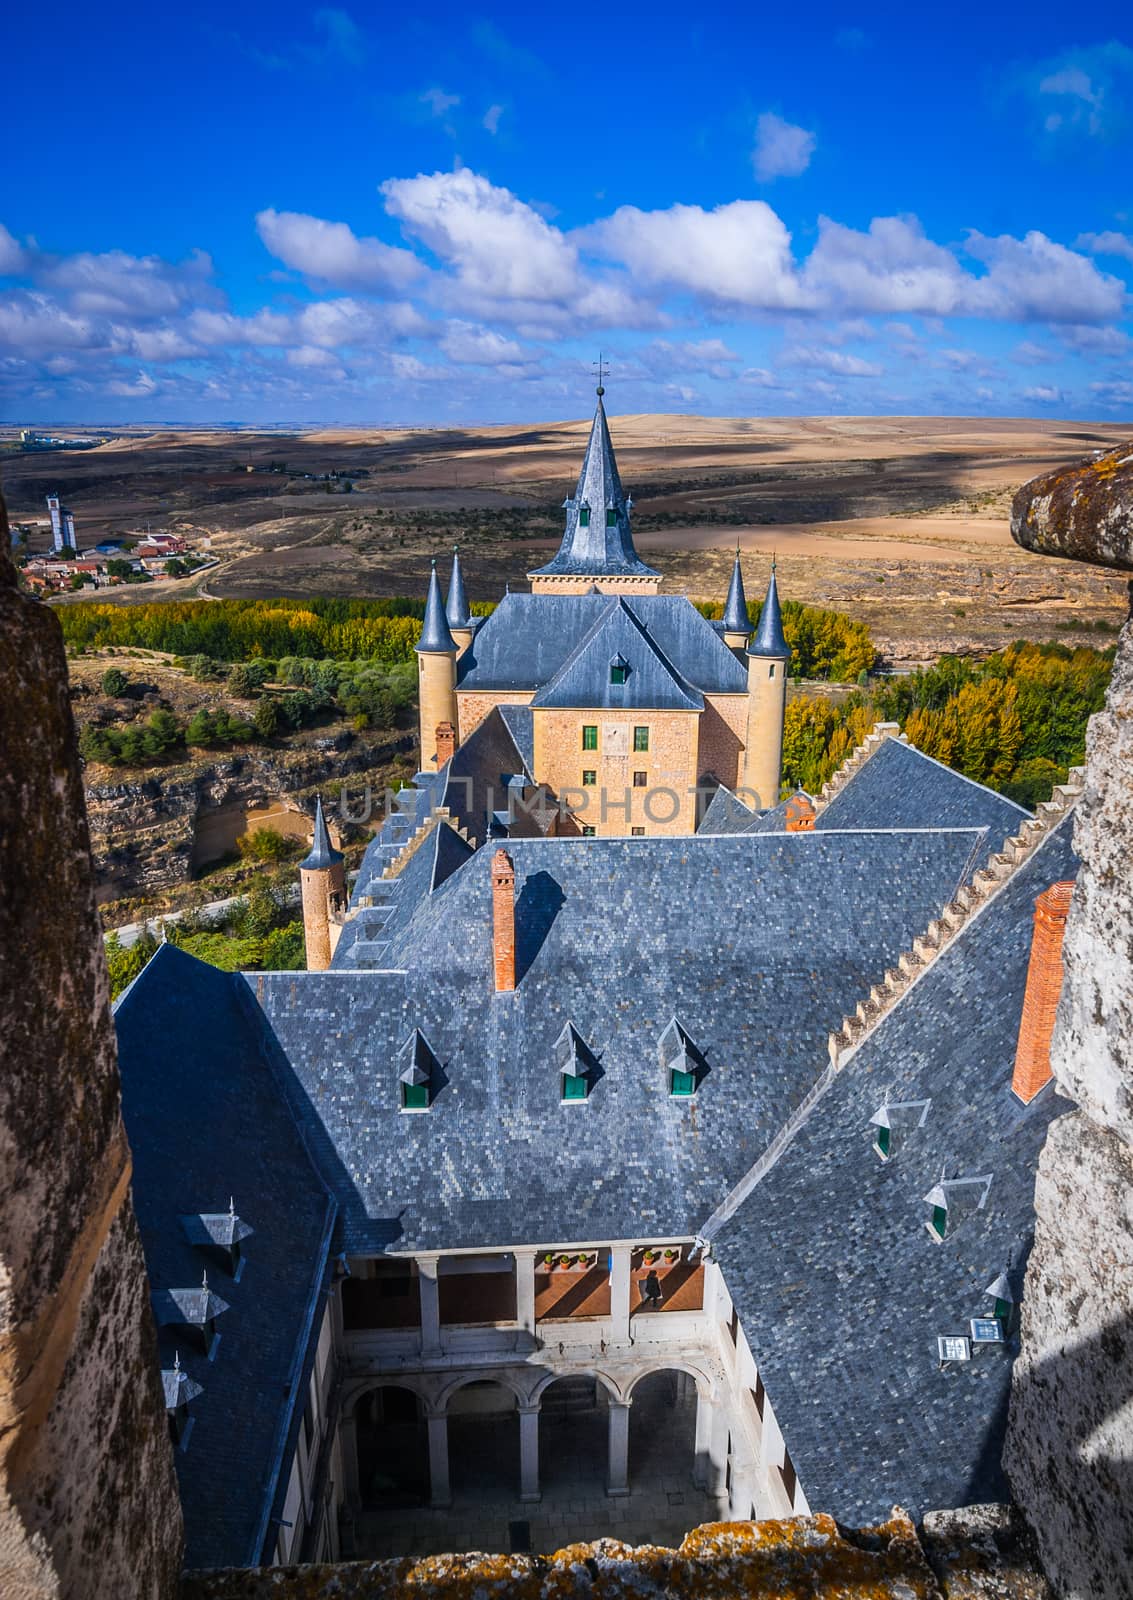 Views from Alcazar castle. by valleyboi63